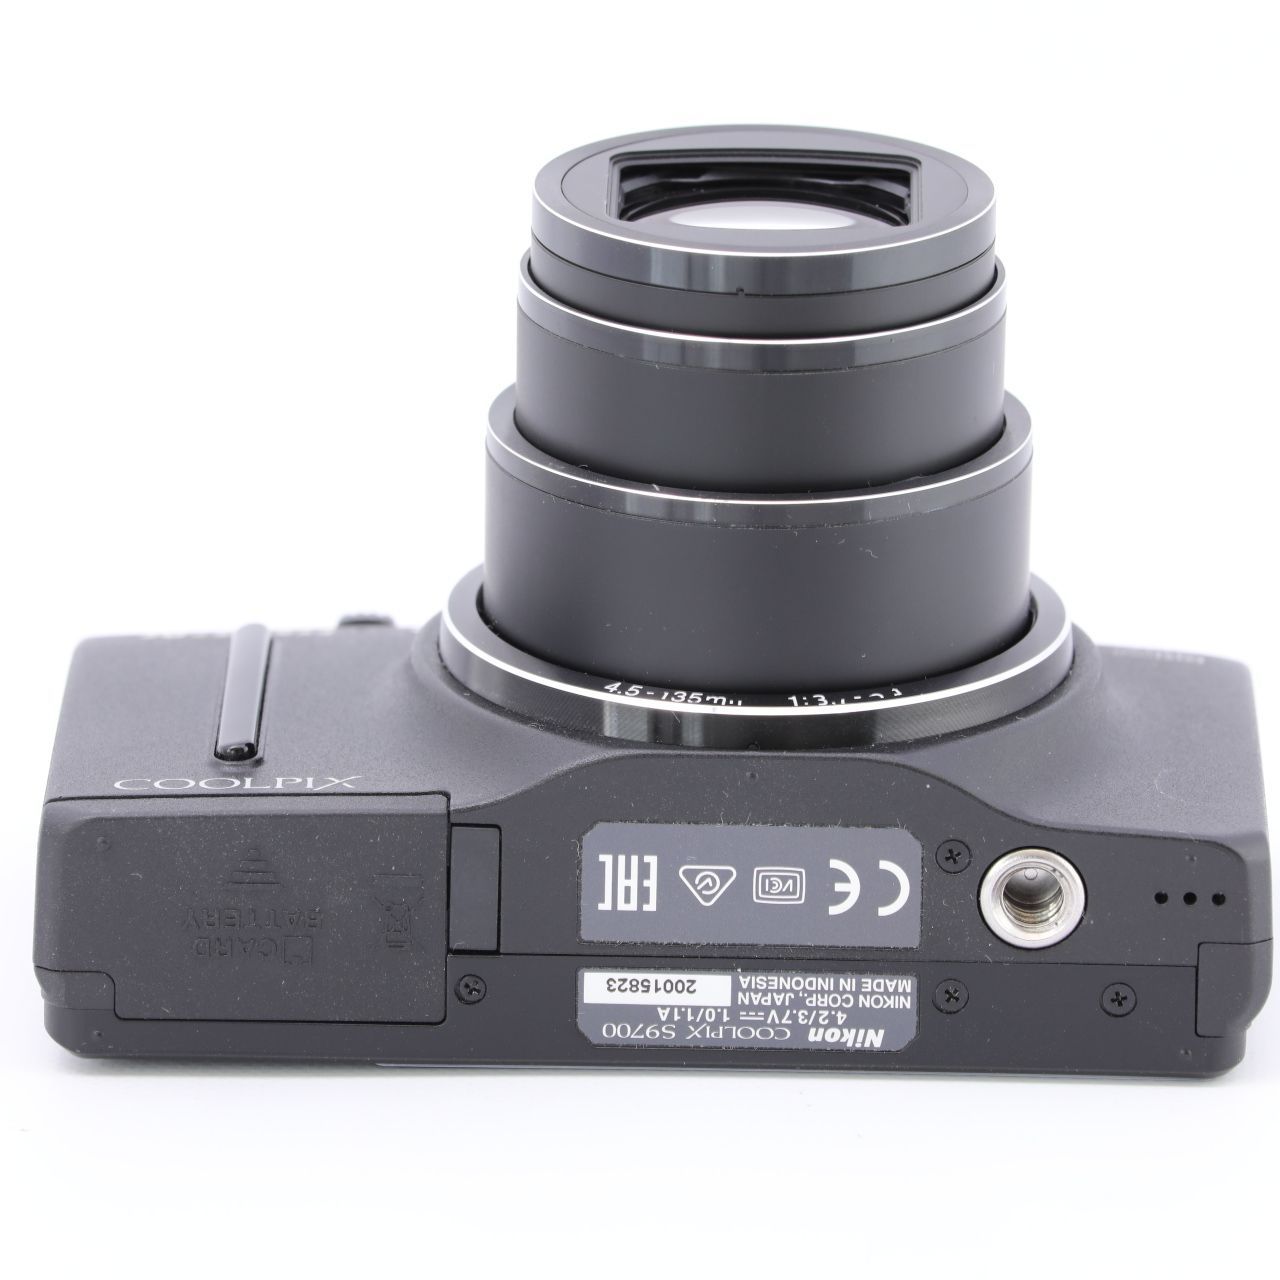 Nikon デジタルカメラCOOLPIX S9700 光学30倍 1605万画素 カメラ本舗｜Camera honpo メルカリ